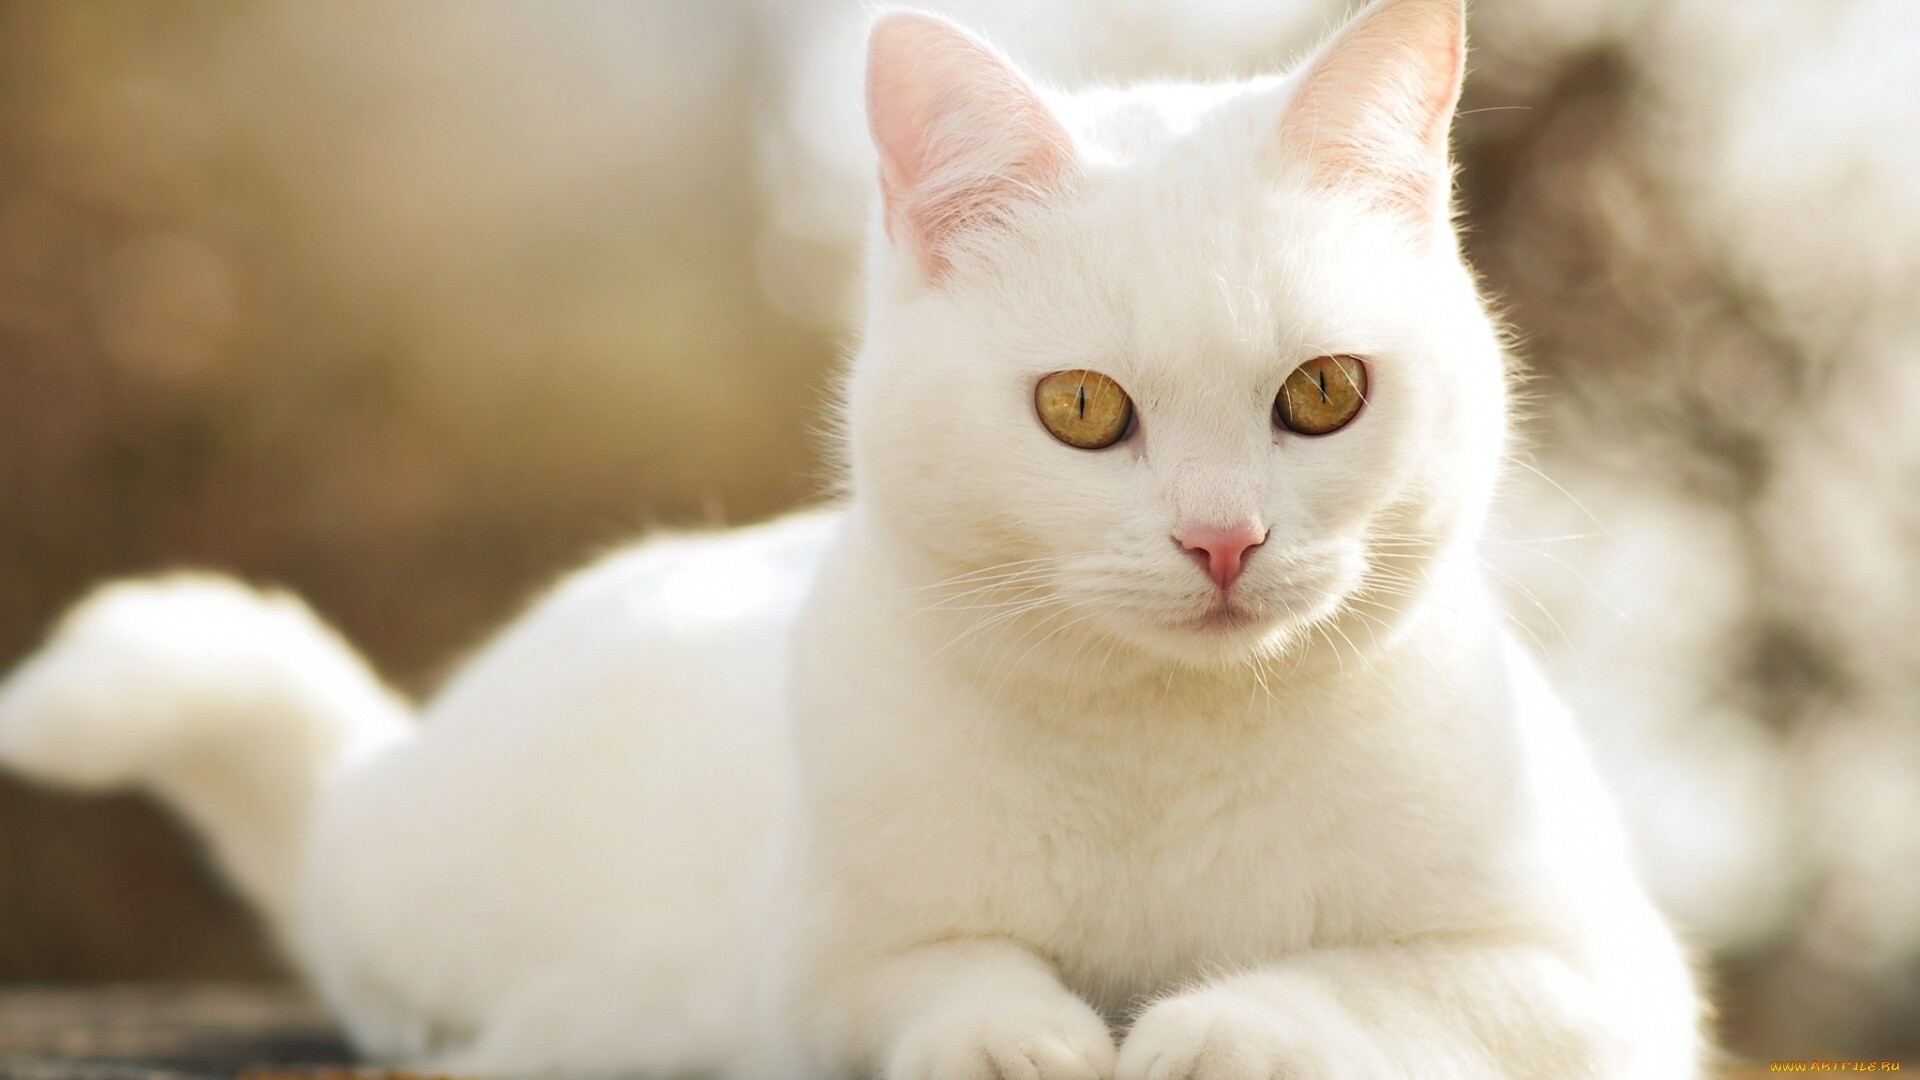 Pure white fur, Snowy white cats, White cat elegance, Serene and peaceful felines, 1920x1080 Full HD Desktop